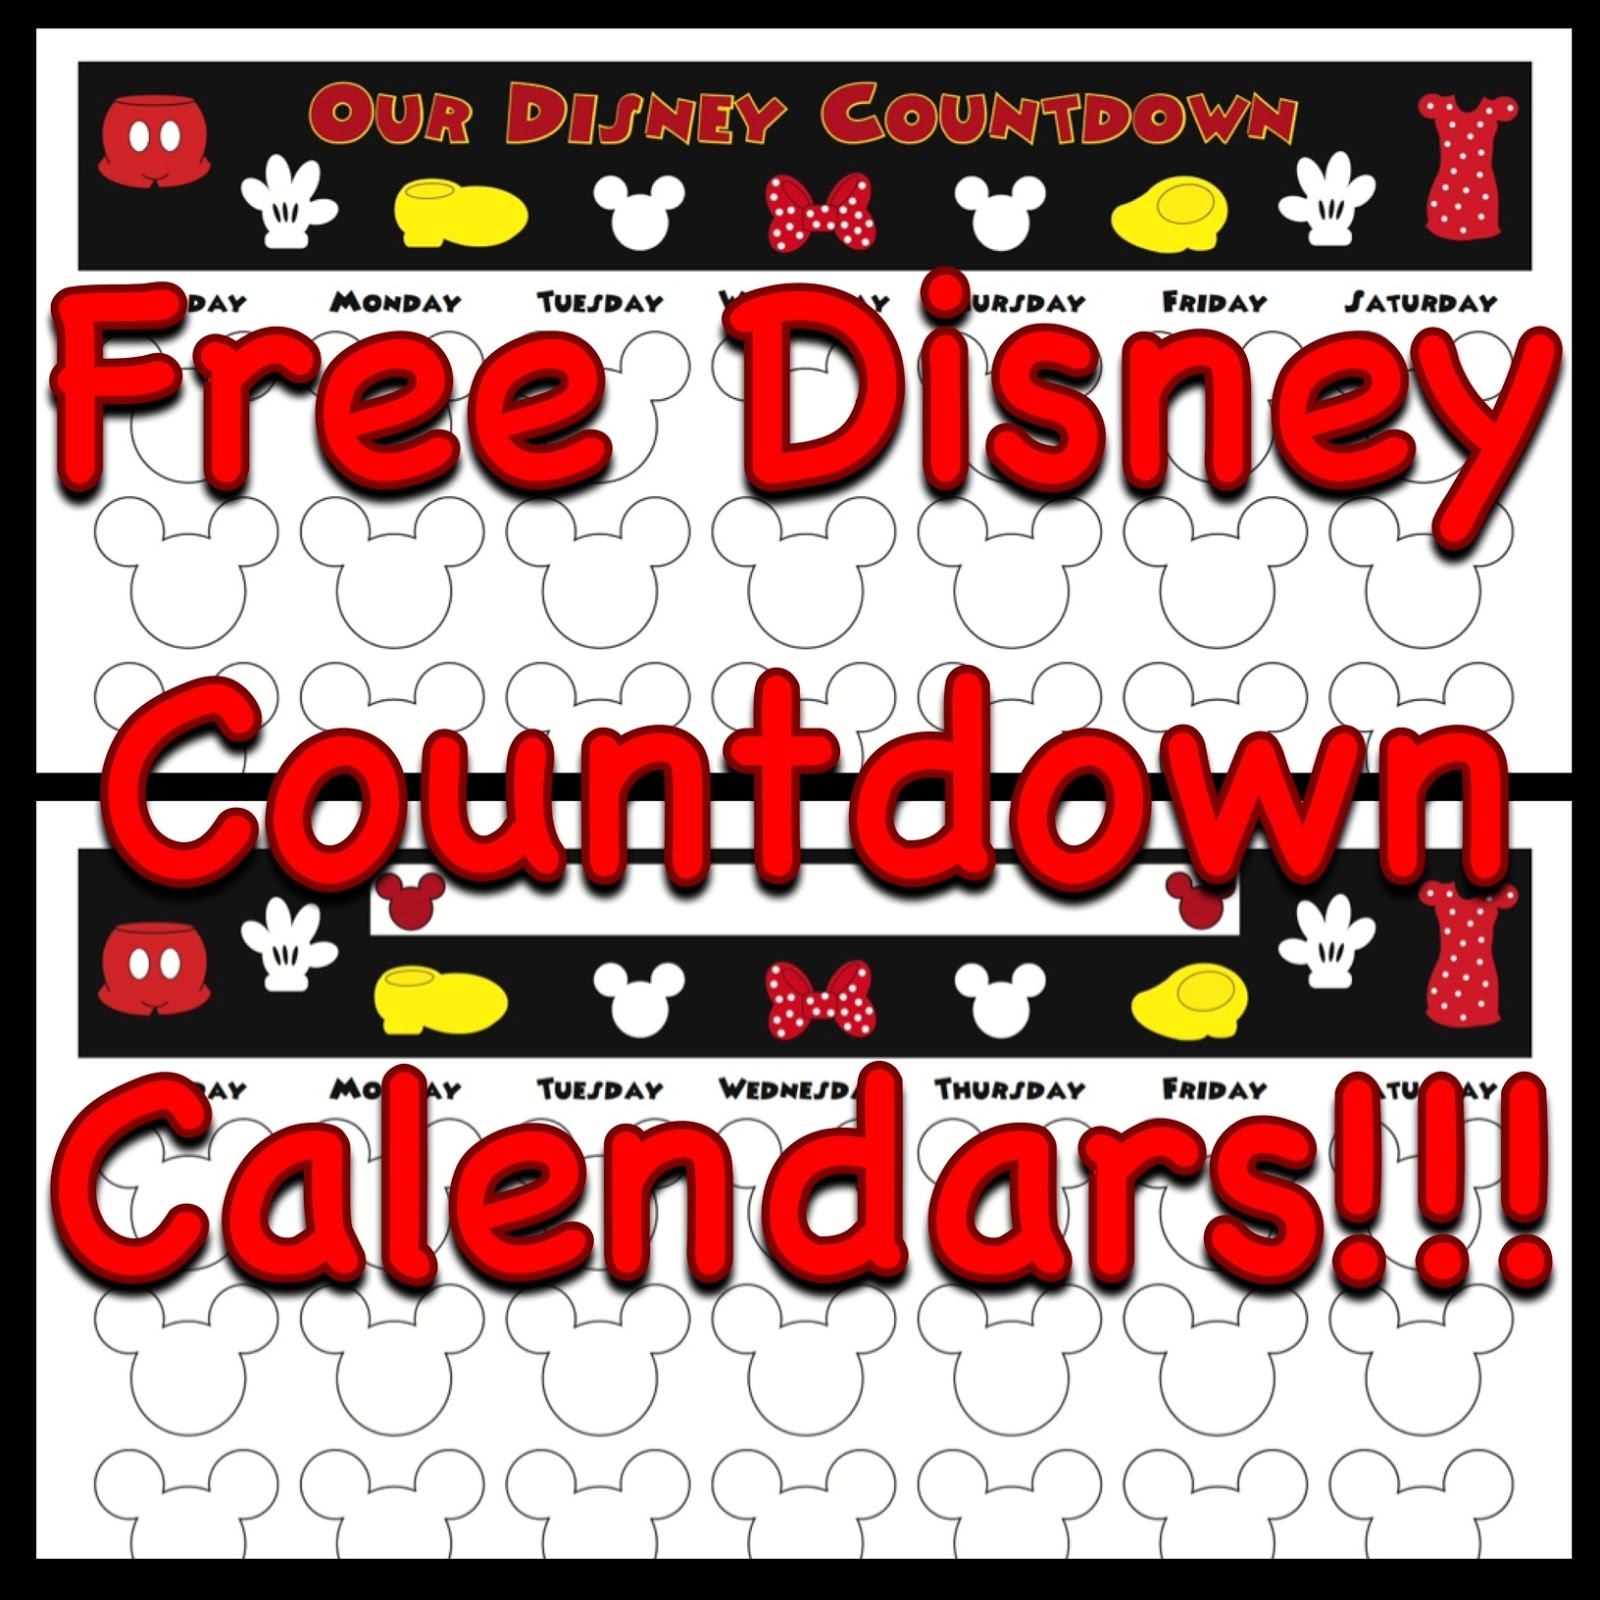 My Disney Life: Countdown Calendars Countdown Calendar To End Of Year